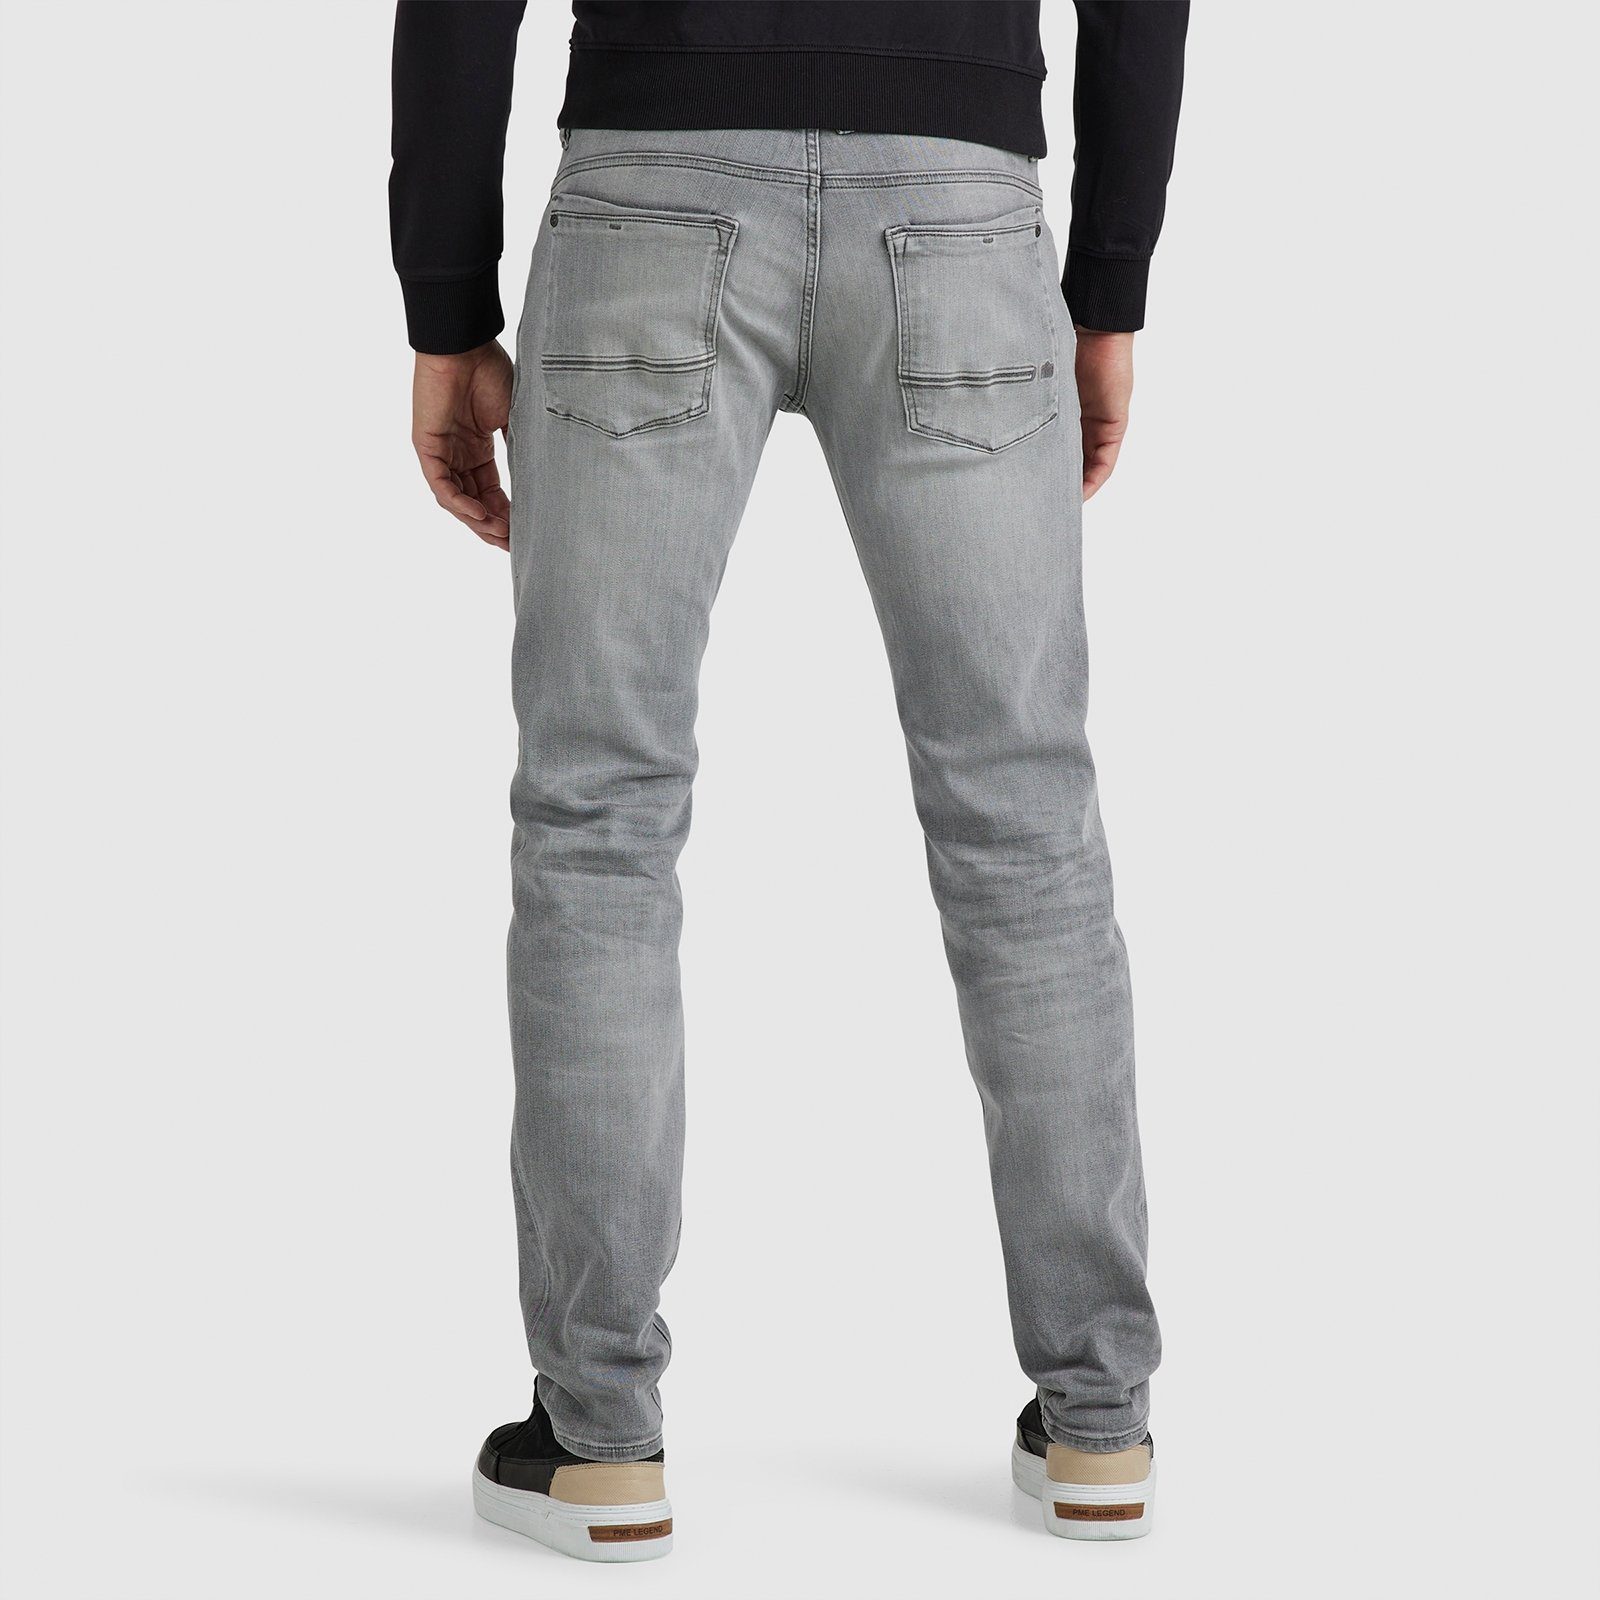 LEGEND PTR180-GDC PME grey 5-Pocket-Jeans PME 3.0 comfort LEGEND COMMANDER denim